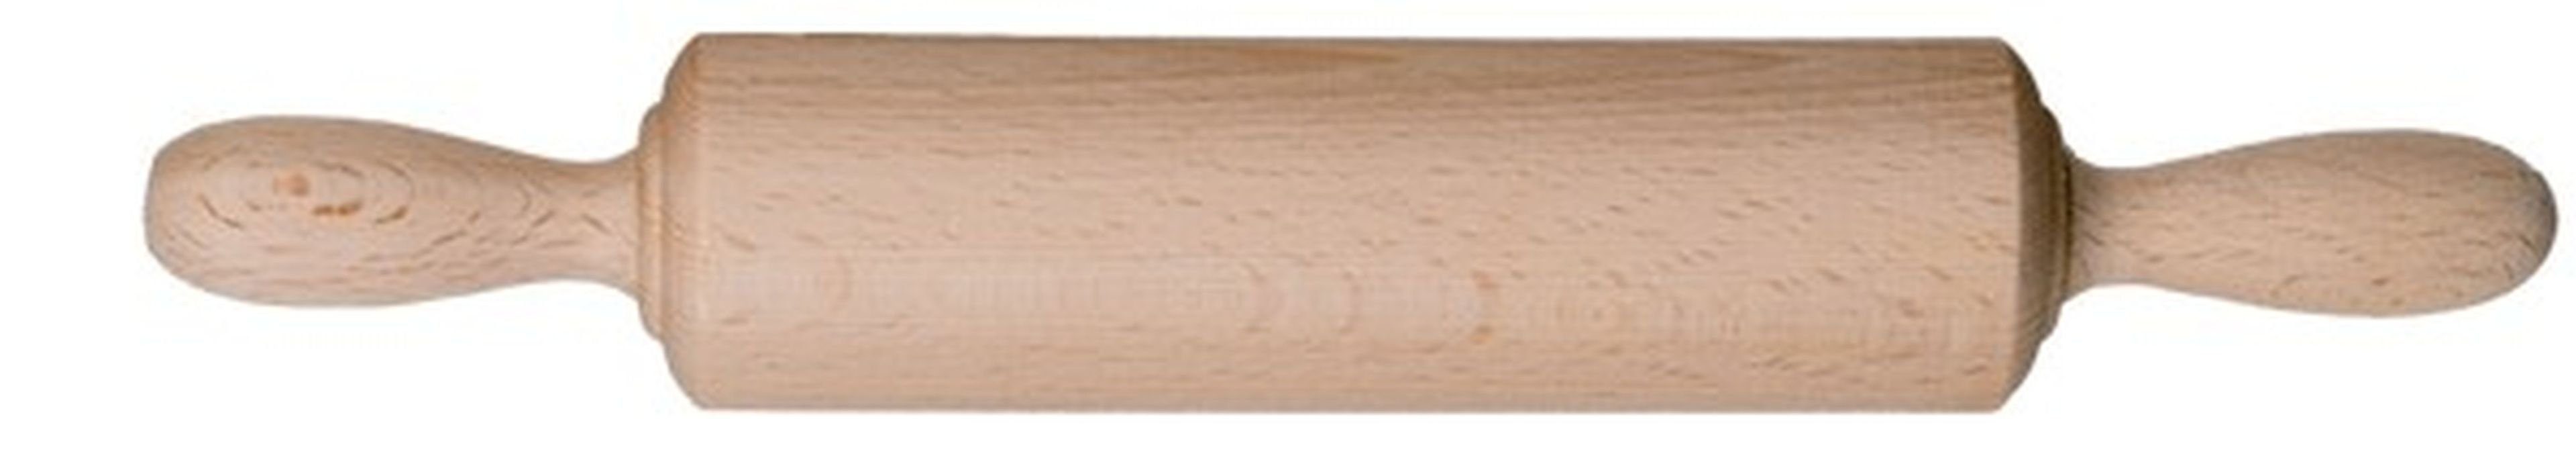 Gravidus Teigroller Teigrolle ohne Achse für Kinder Nudelholz Holz 25 cm Material: Buche